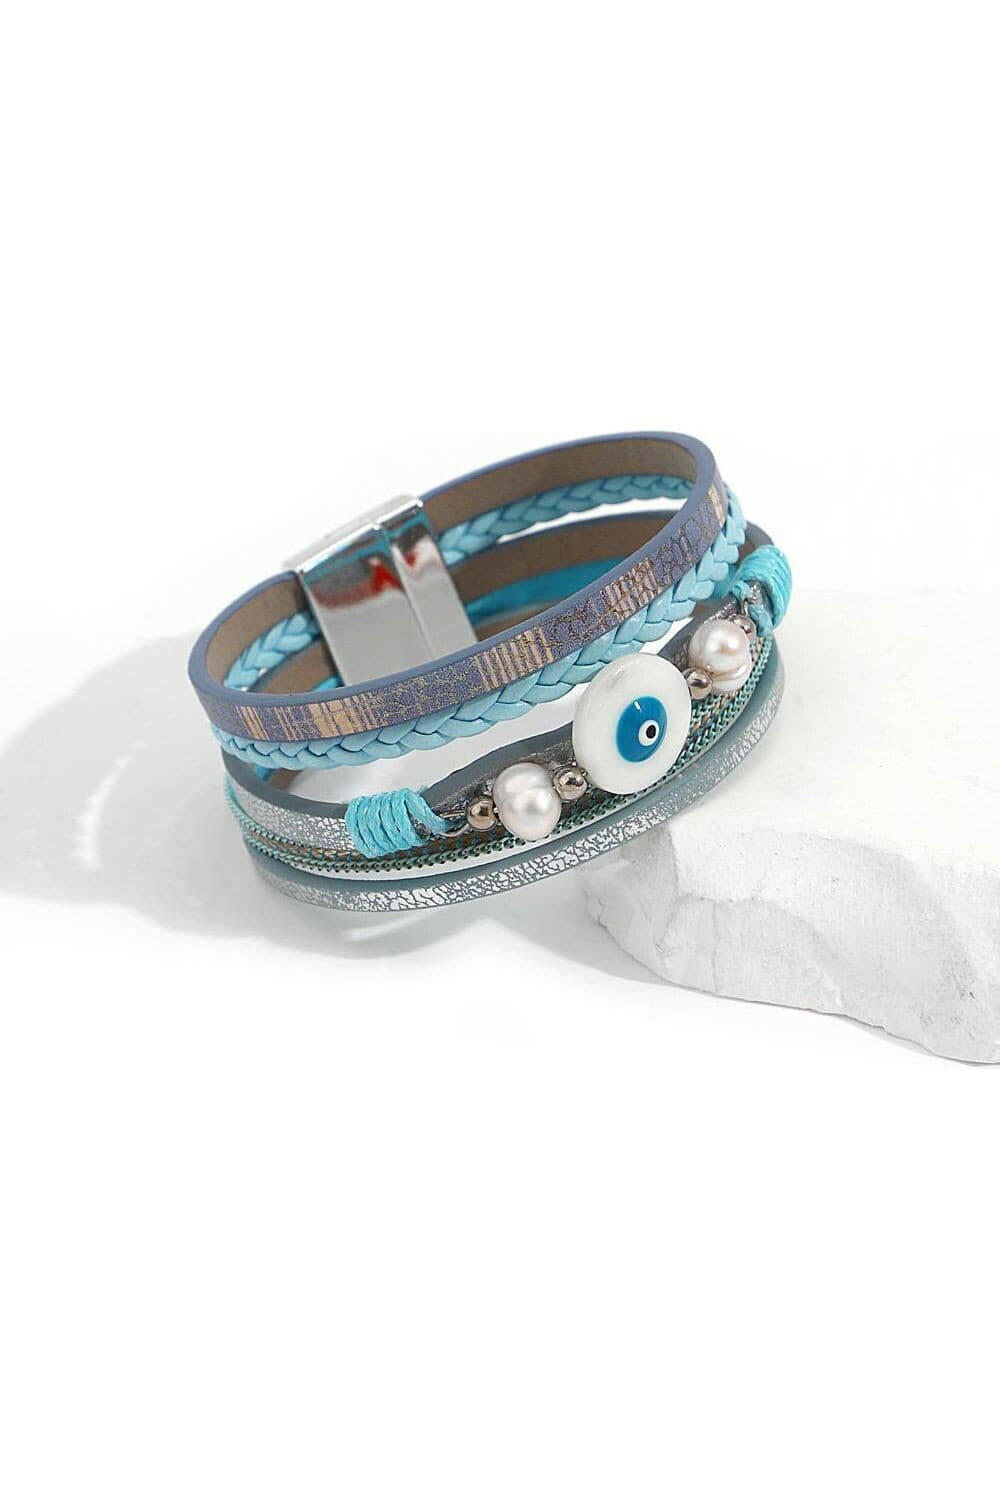 Boho Blue Multilayer Braided Leather Bracelet for Women - Charm Heart Cross Evil Eye Pearl Wrap Bracelets.